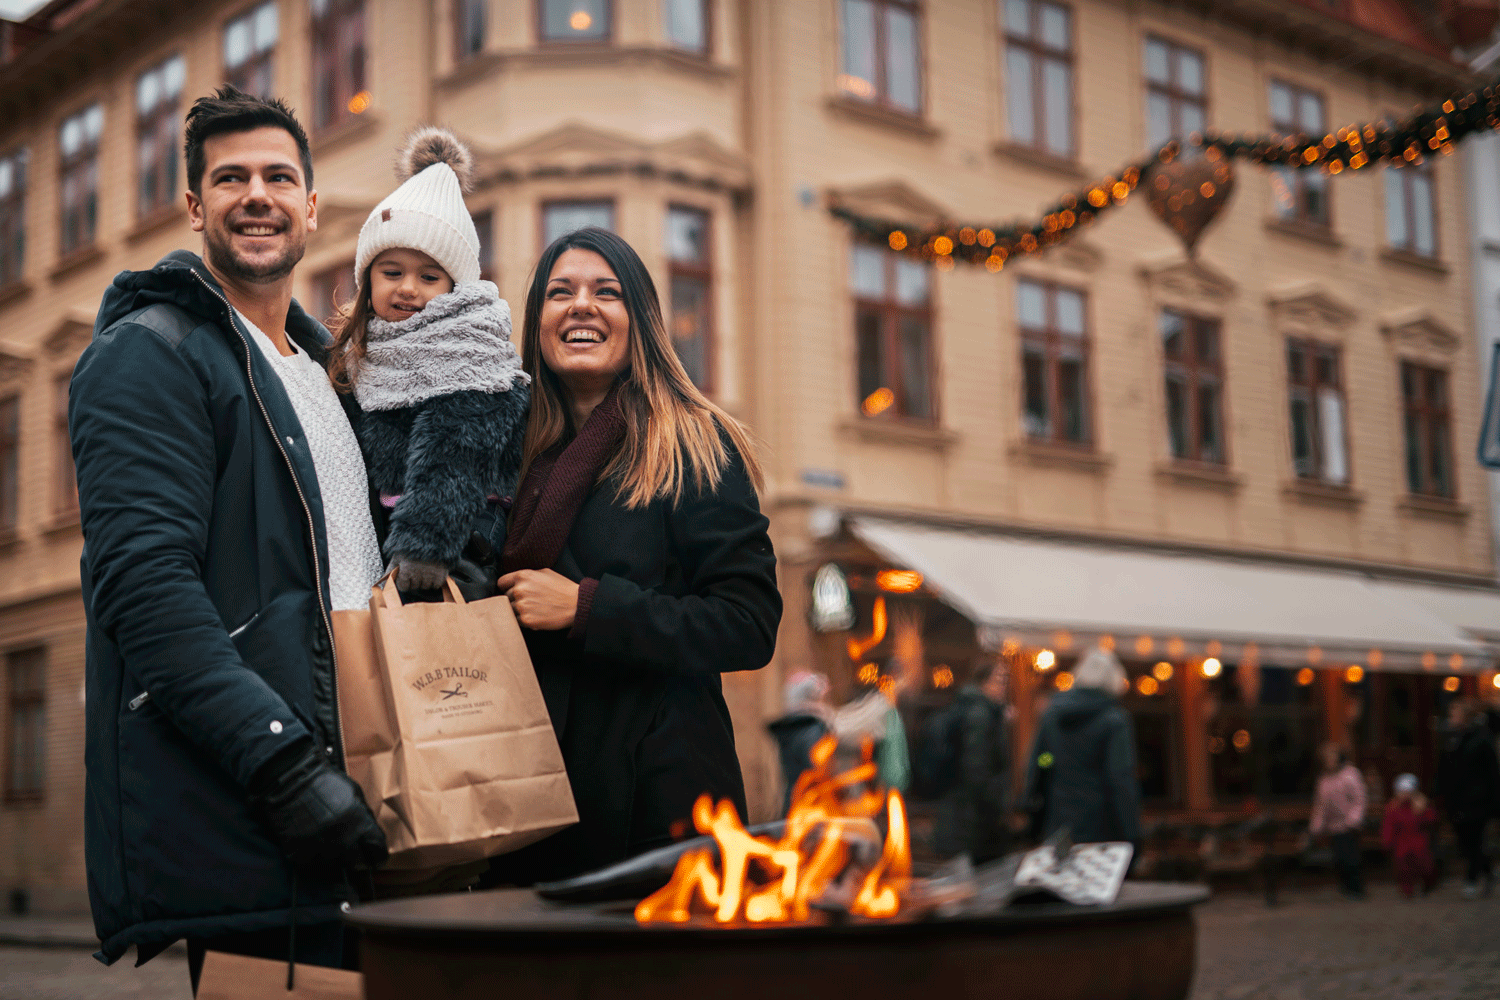 Two grown ups and a child enjoying christmas shopping.